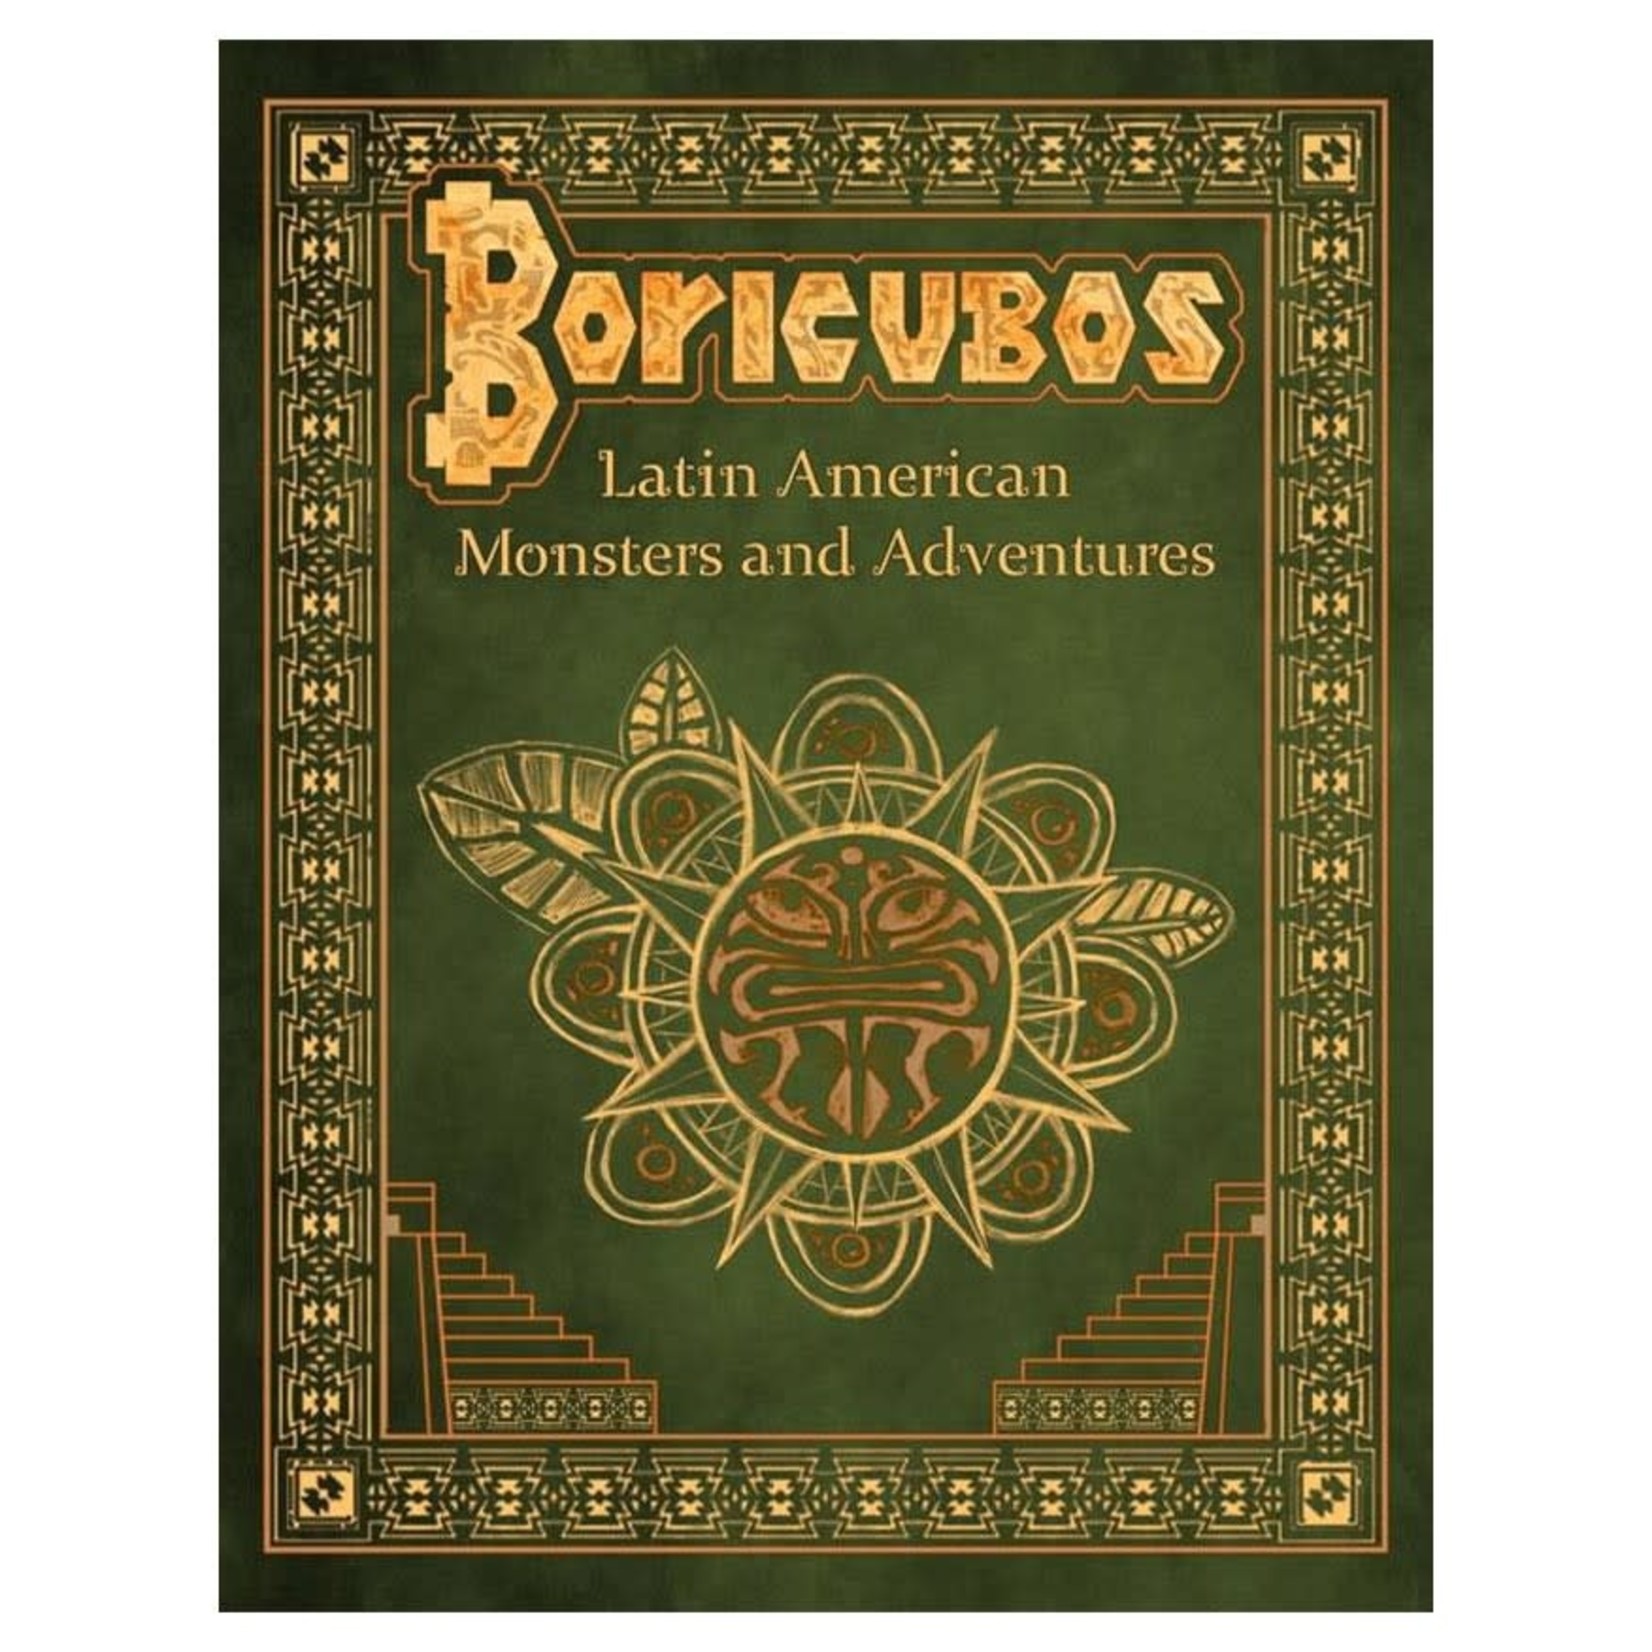 D&D 5E: Boricubos Latin American Monsters & Adventures RPG